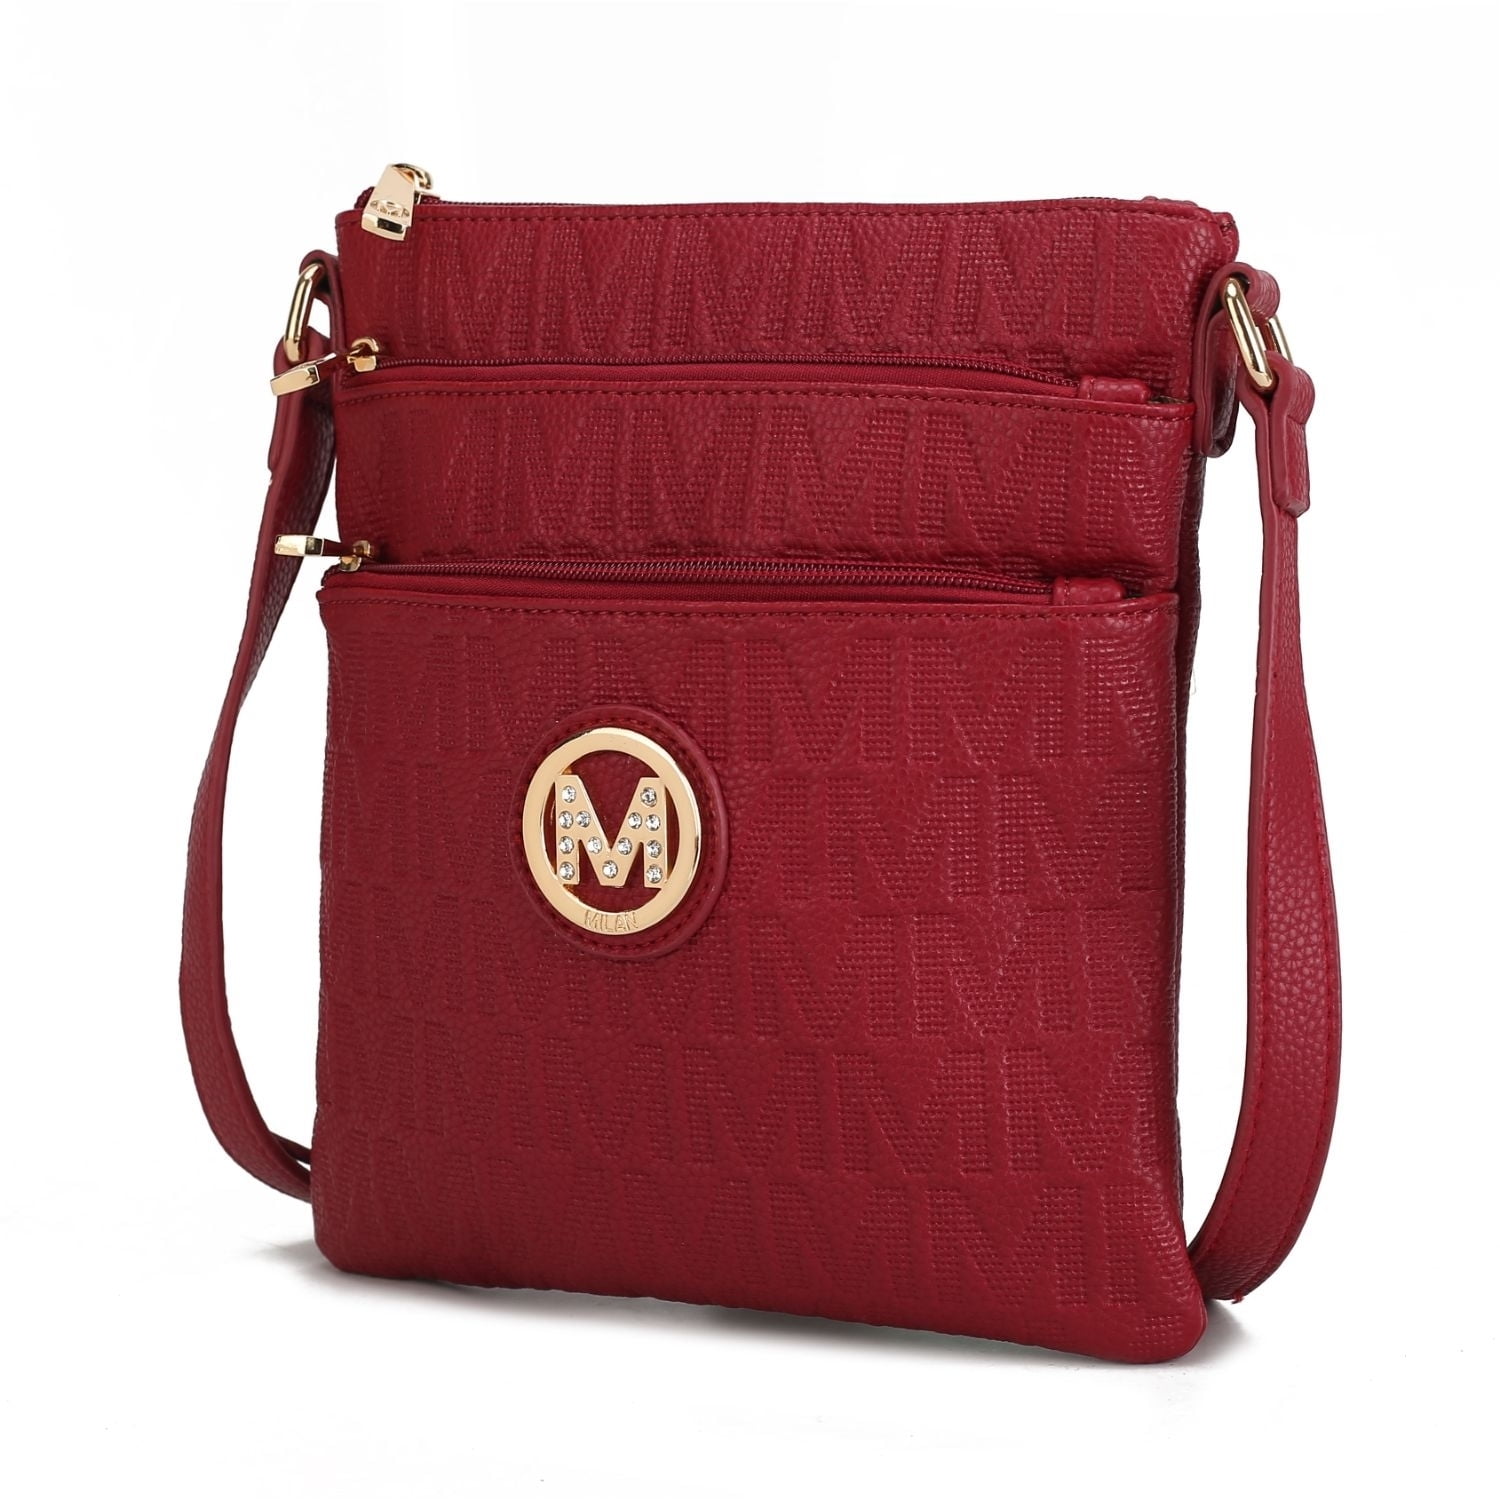 MKF Collection by Mia K. Evanna 3 Pcs Crossbody Handbag 3 Pieces Set - Brown - Small